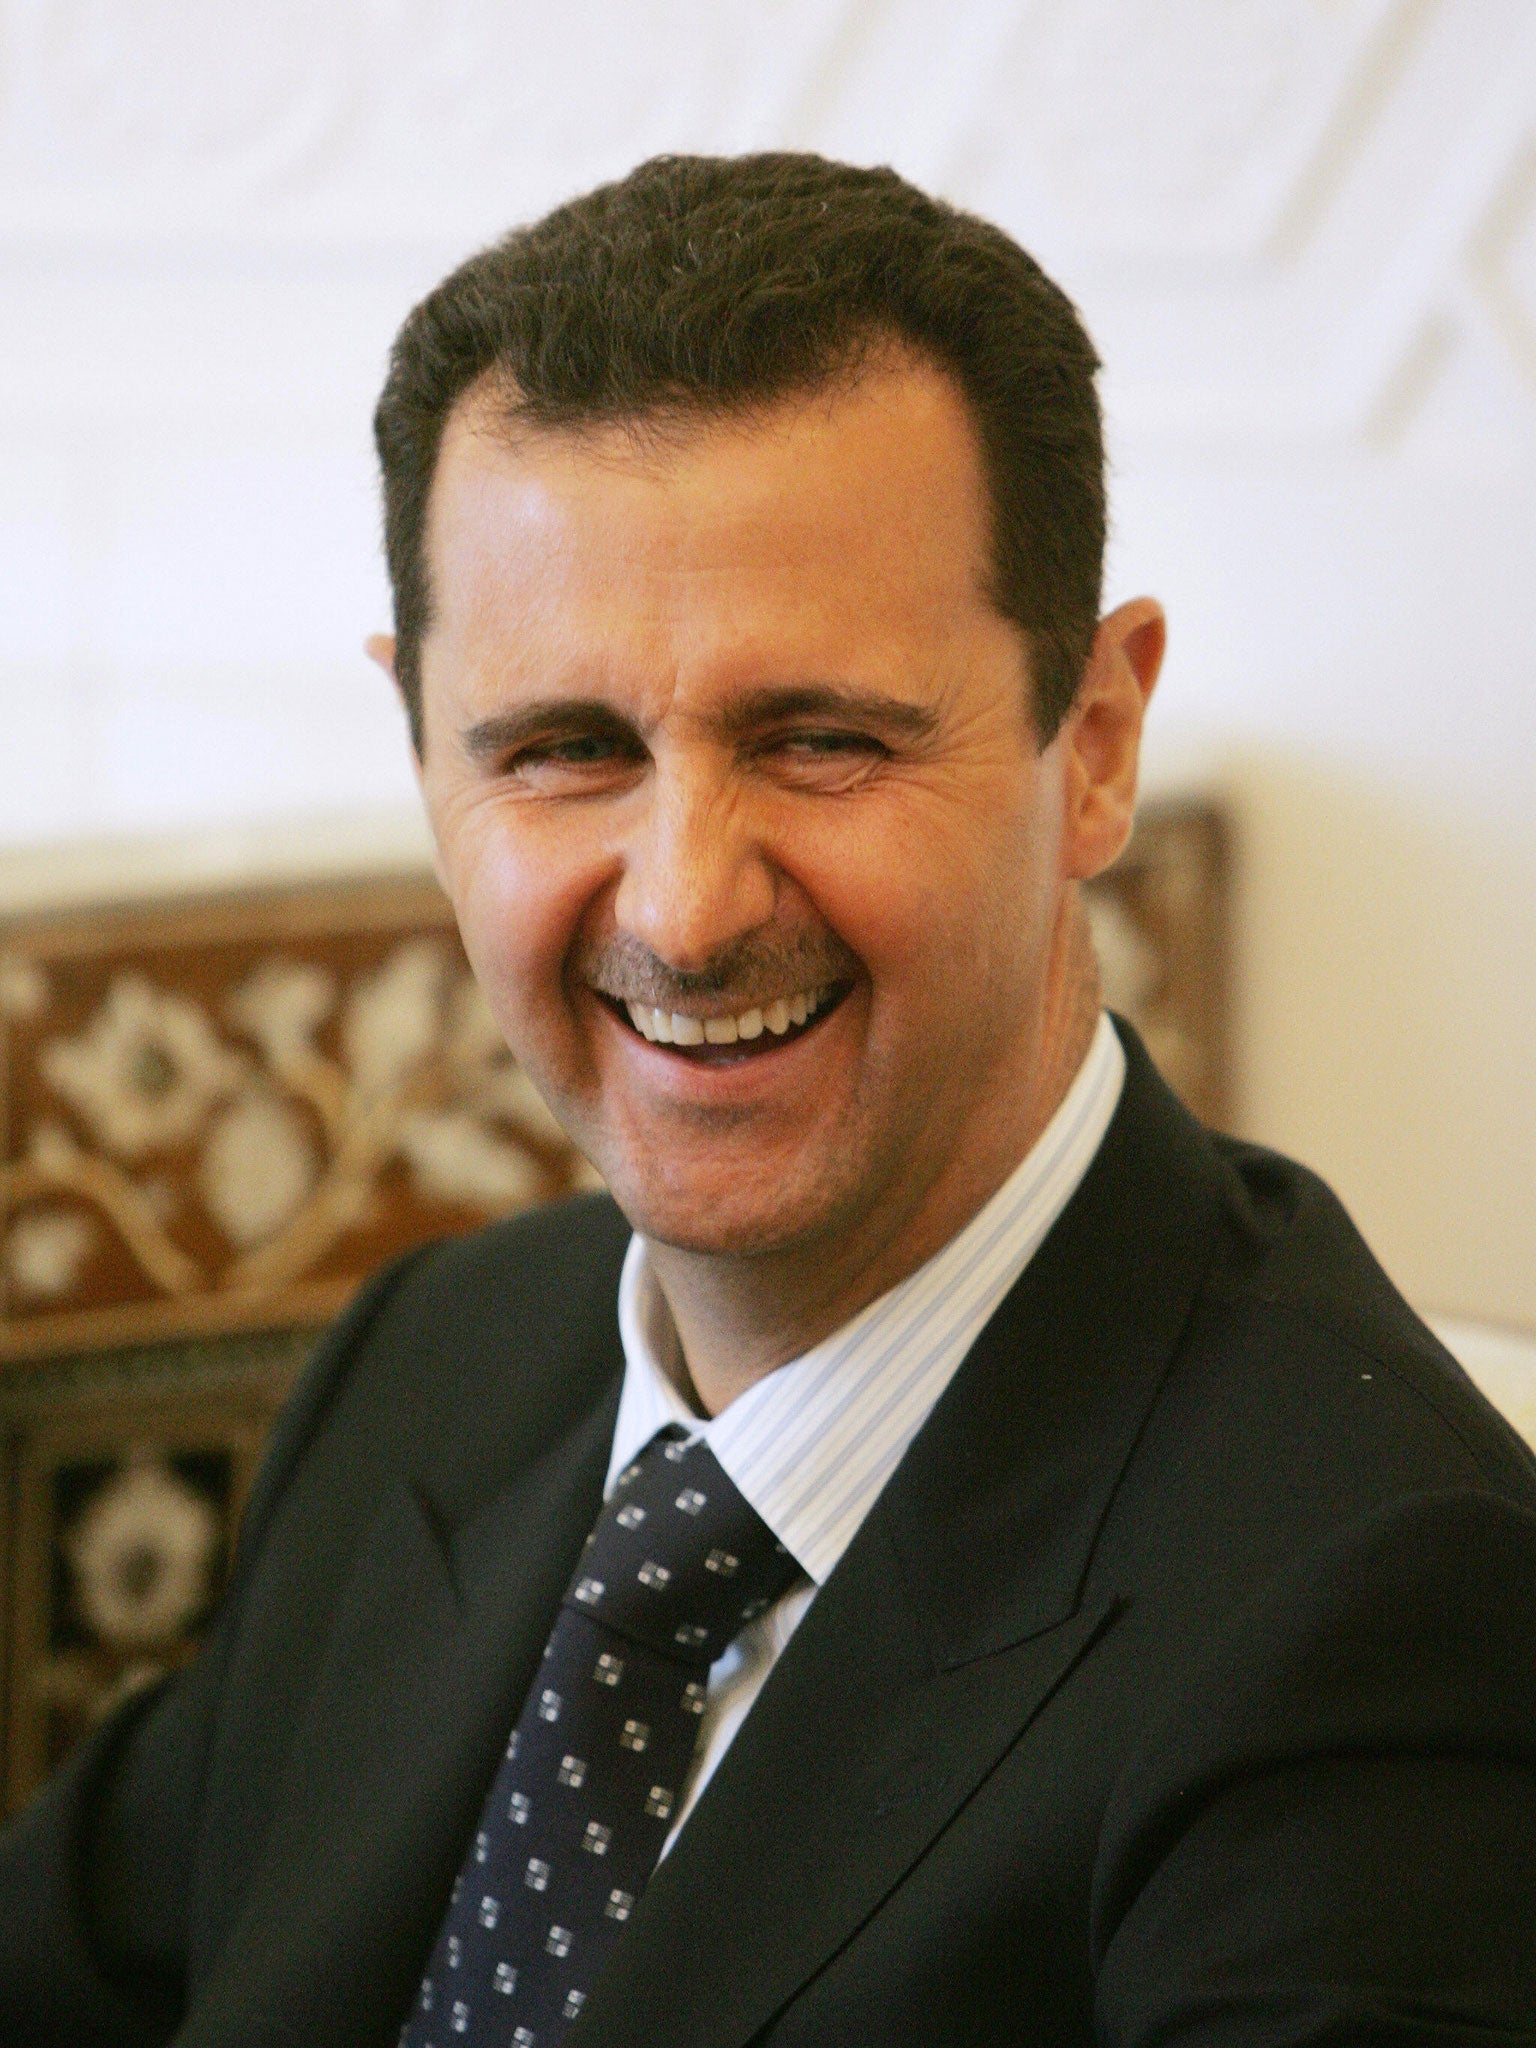 bashar-al-assad-jokes-that-he-should-have-won-nobel-peace-prize-the